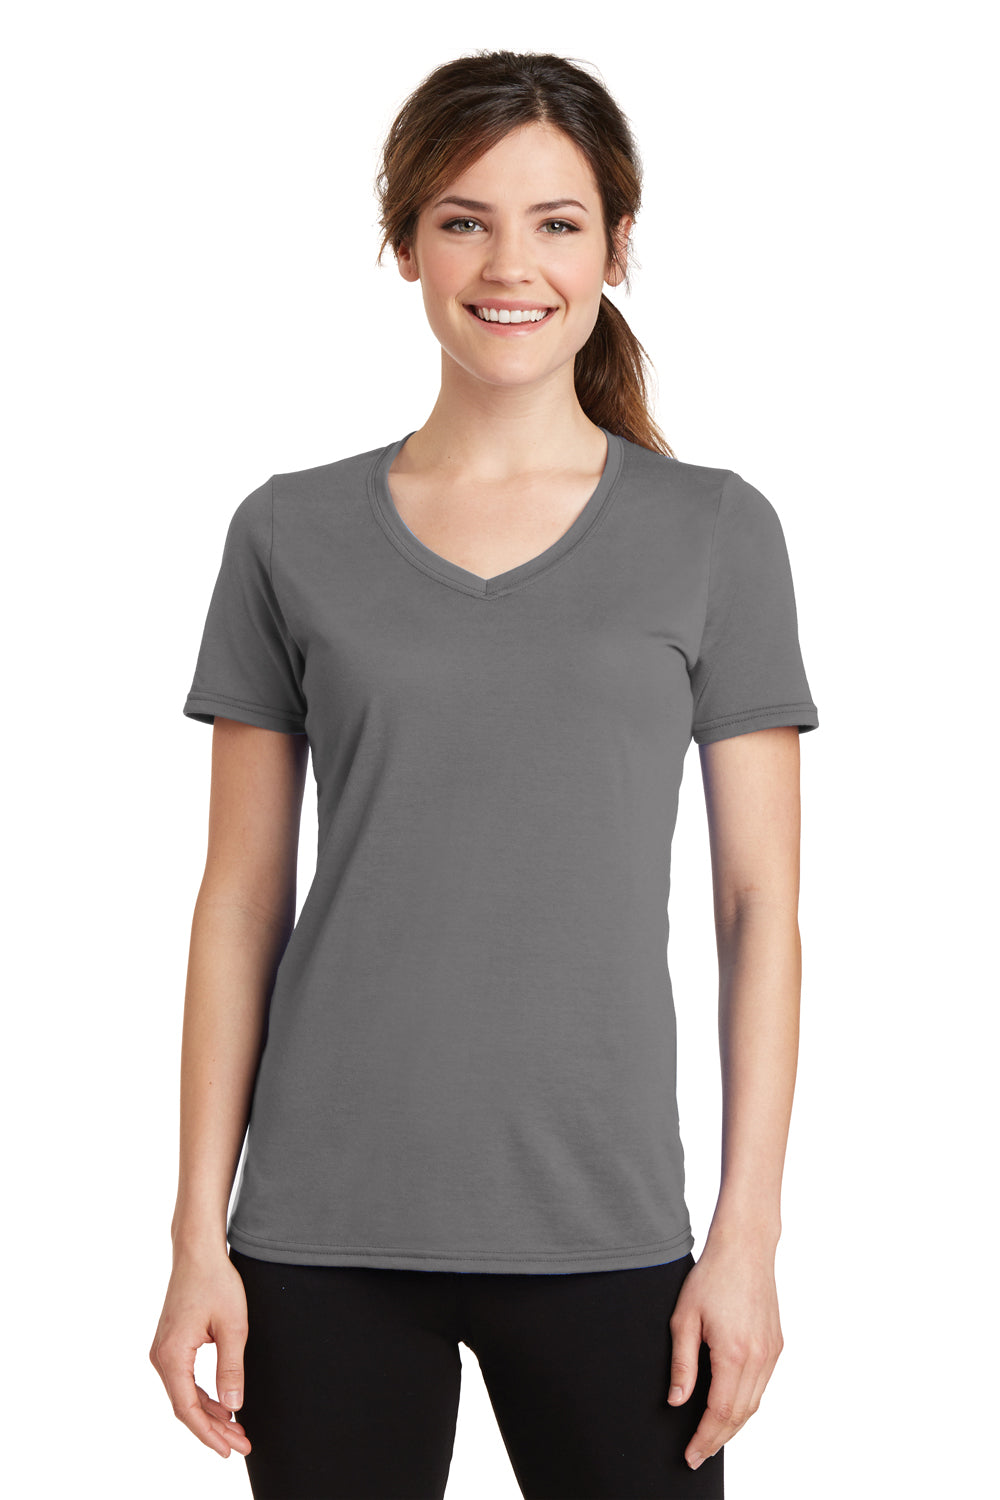 Port & Company LPC381V Womens Dry Zone Performance Moisture Wicking Short Sleeve V-Neck T-Shirt Medium Grey Front